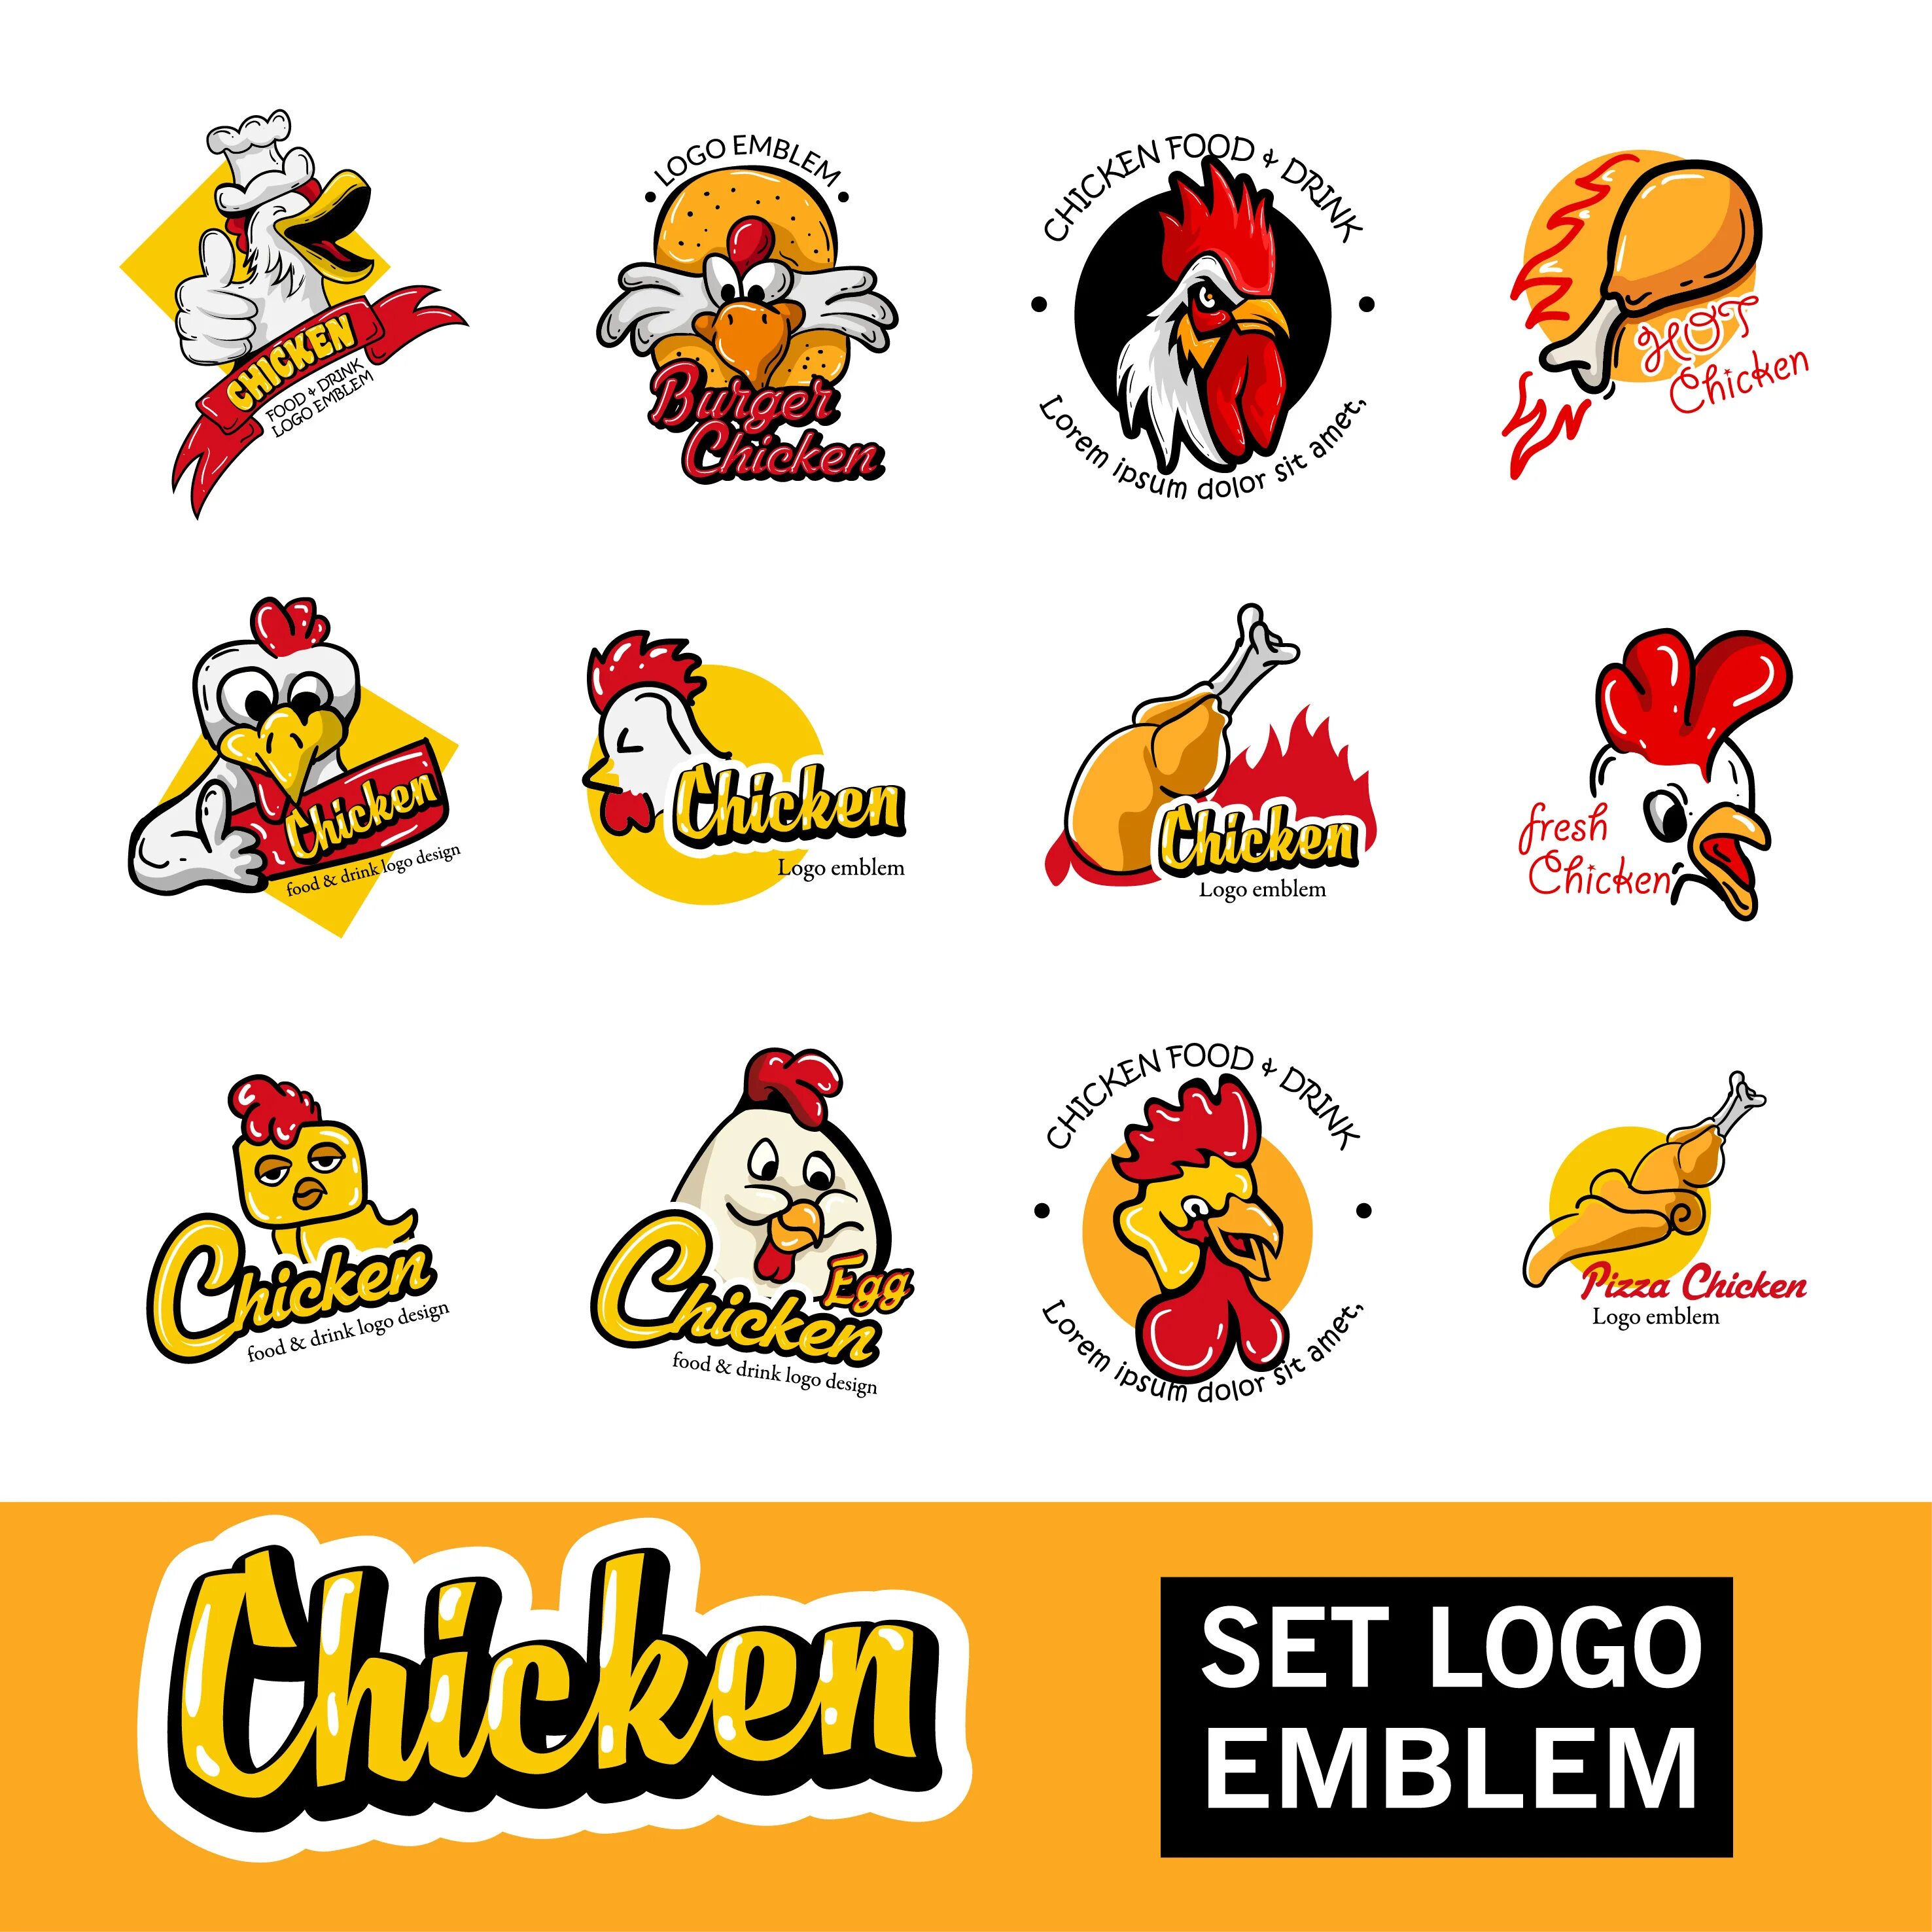 Слова chicken chicken. Фаст фуд курица логотипы. Чикен логотип. Логотип Курочка. Логотип с курами.